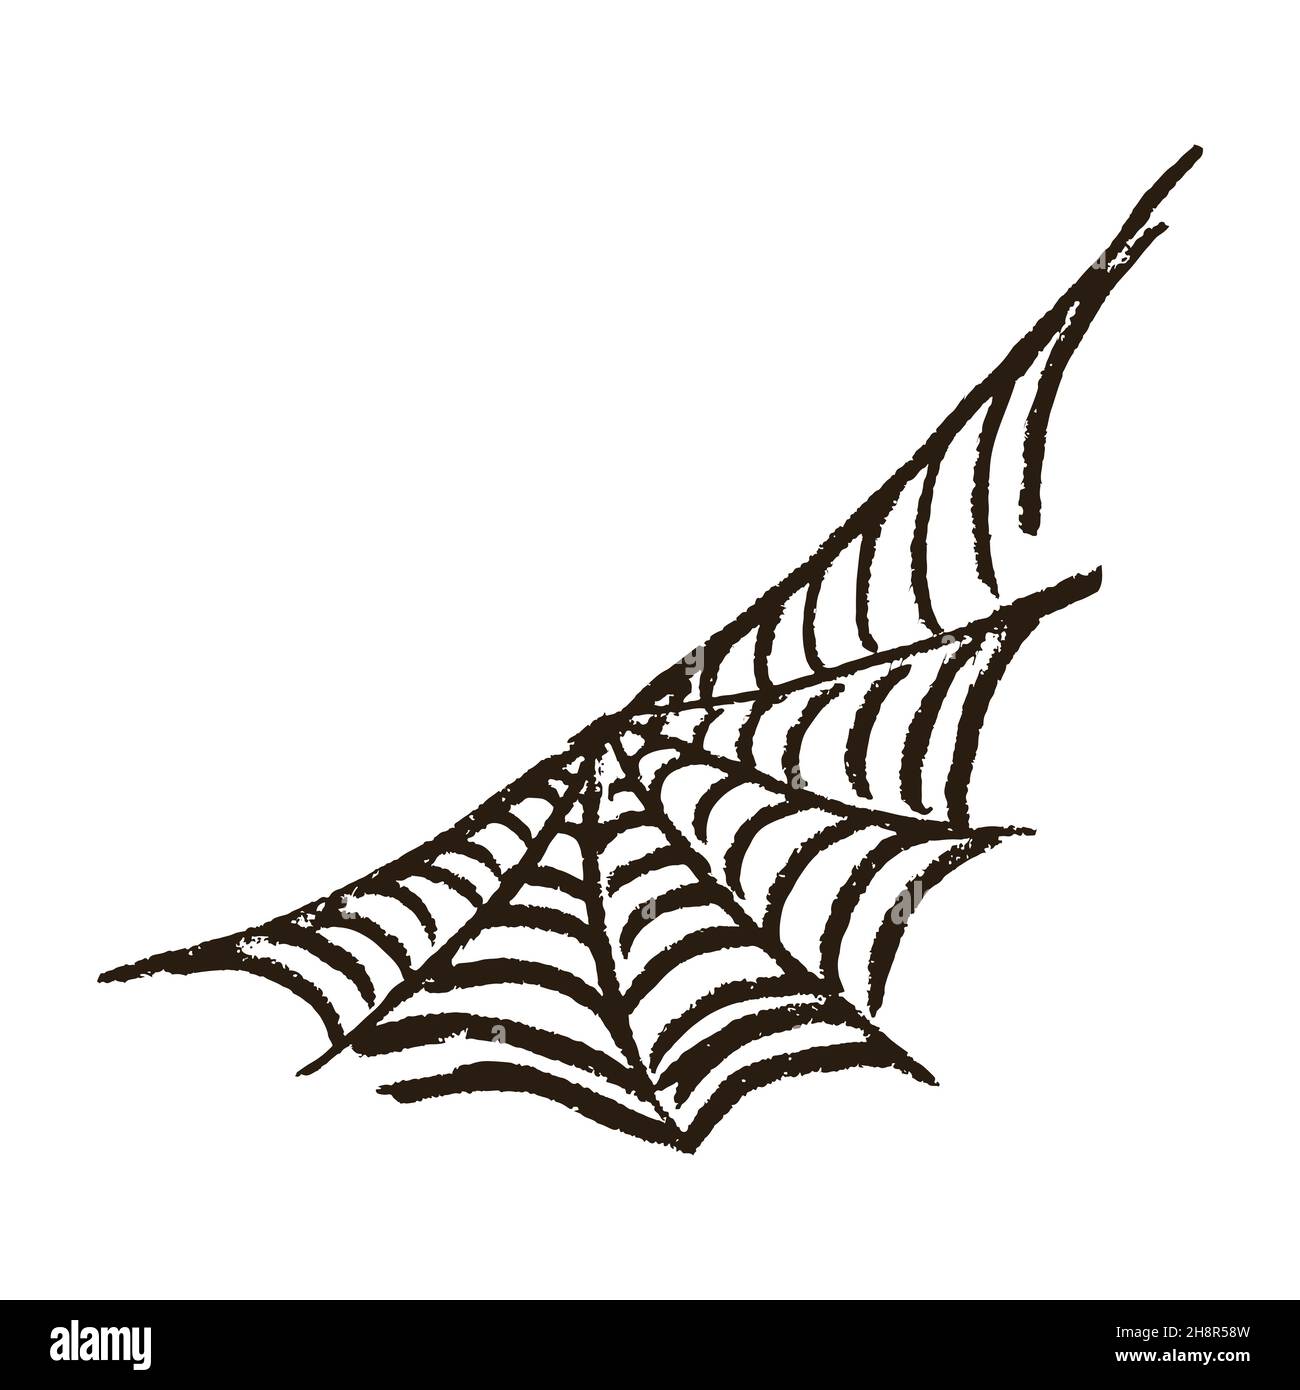 Free Vector  Realistic spider web cobweb set  Spider web drawing Spider  drawing Spider web tattoo